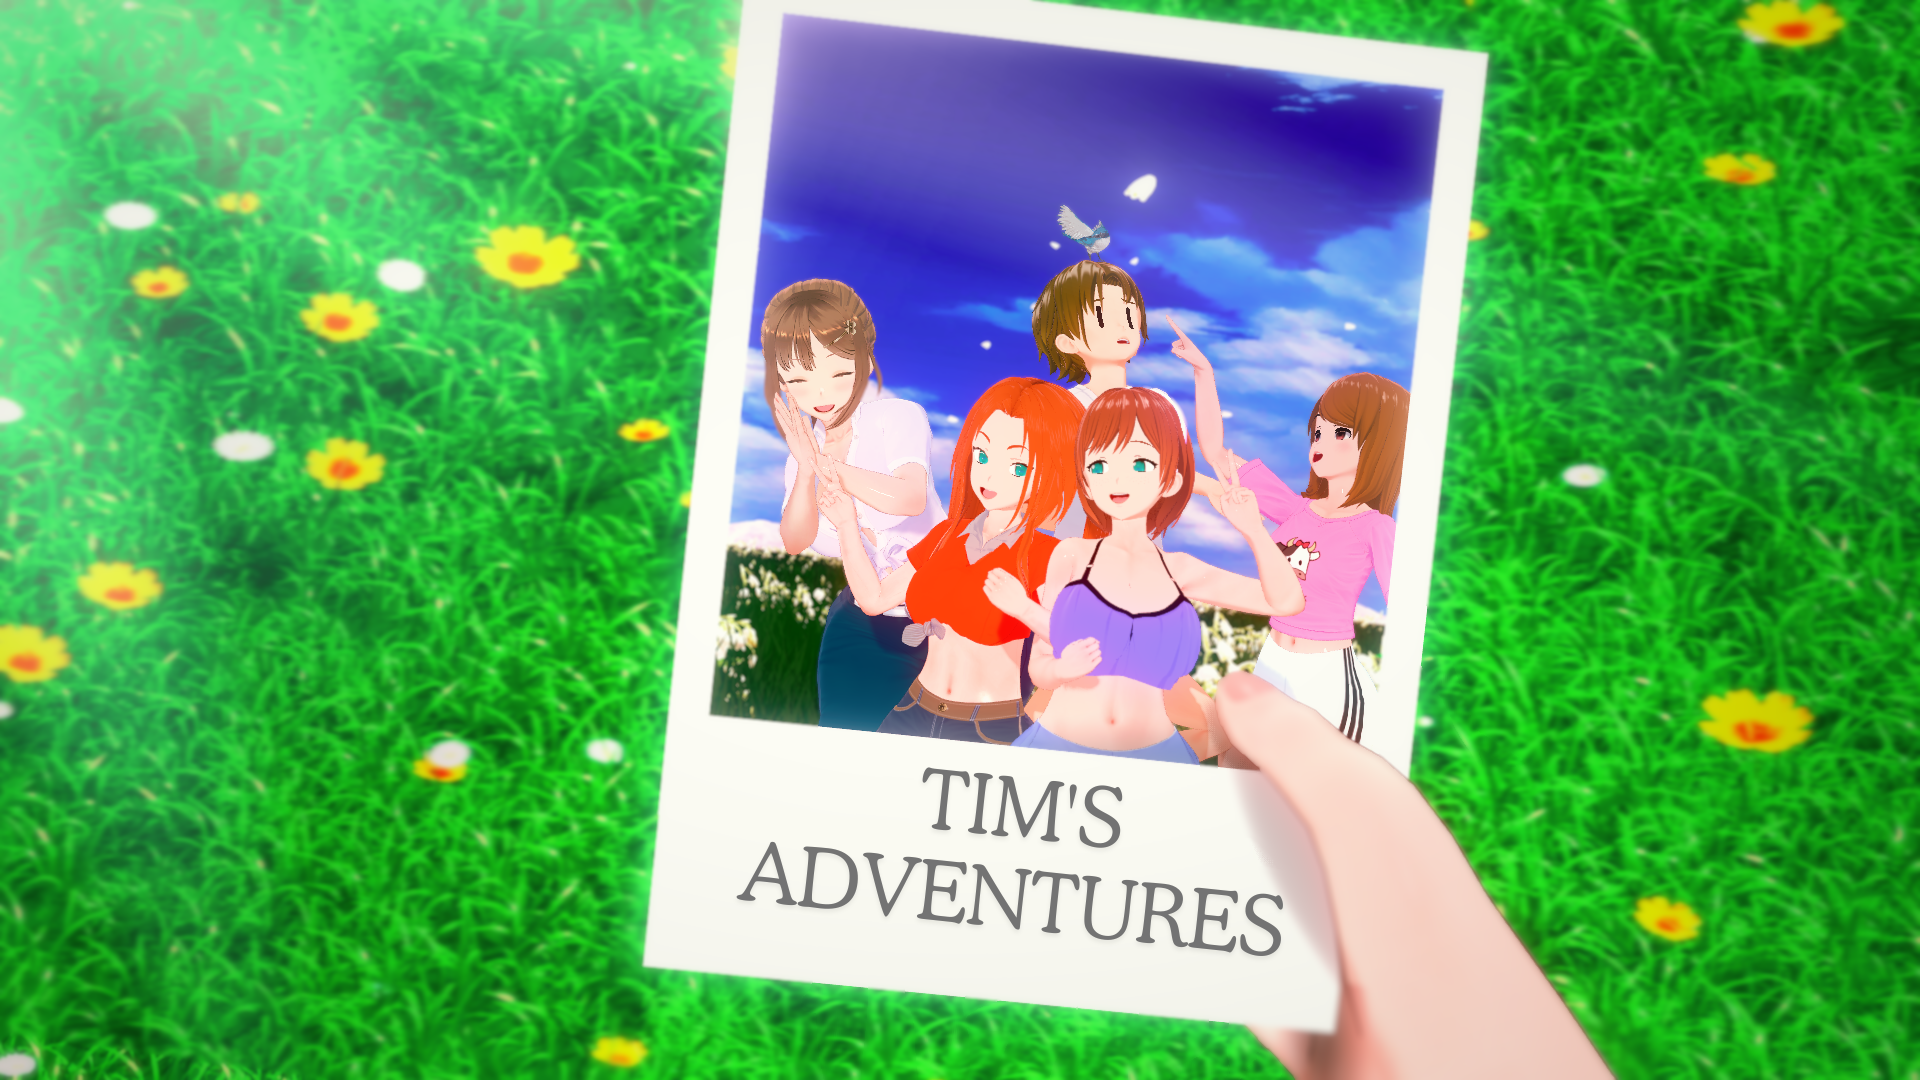 Tim's Adventures